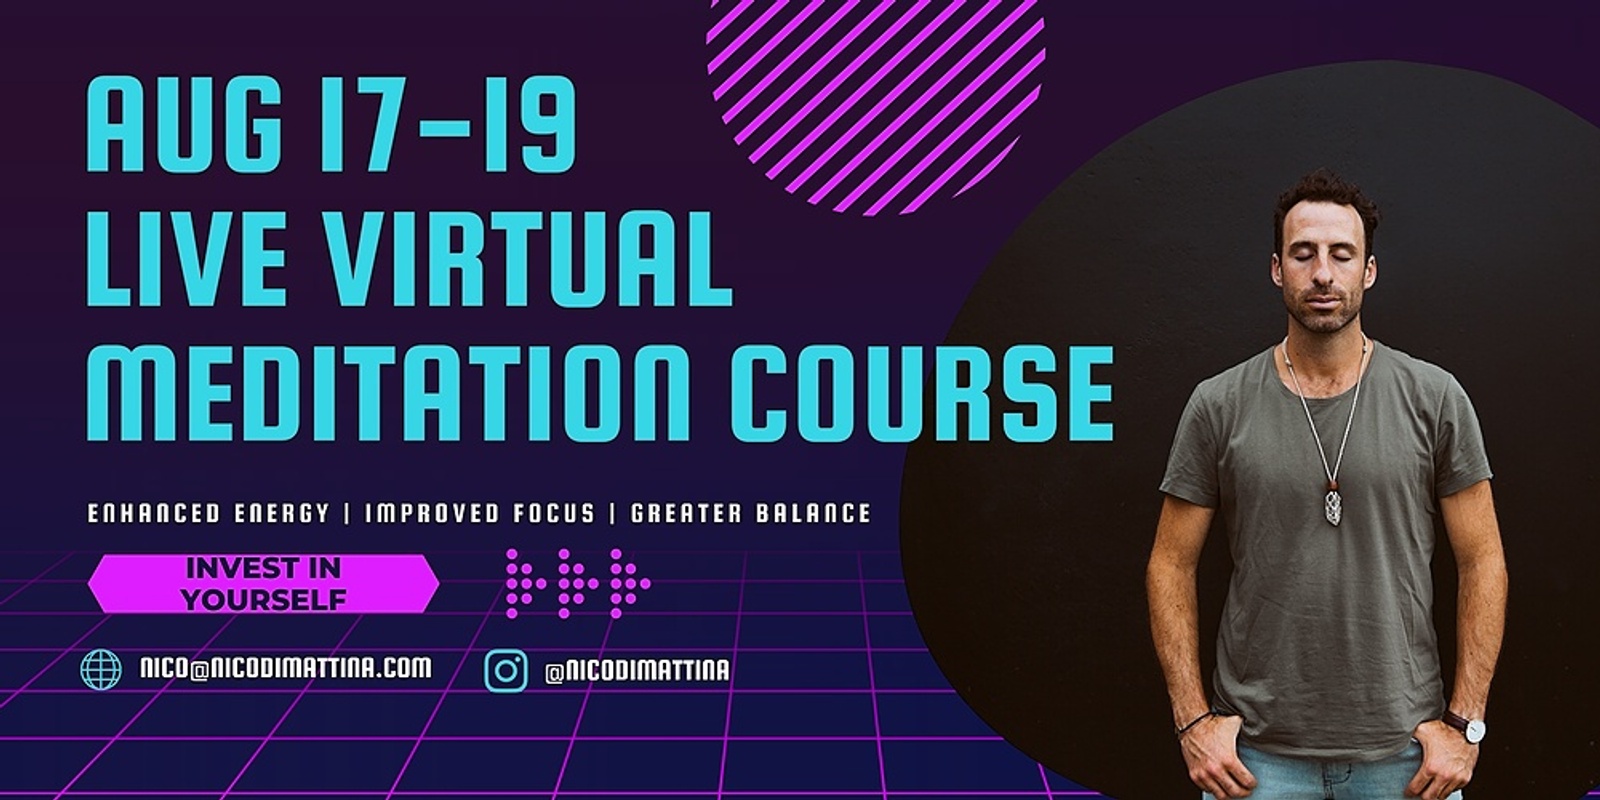 Banner image for Aug 17-19 LIVE Virtual Meditation Course